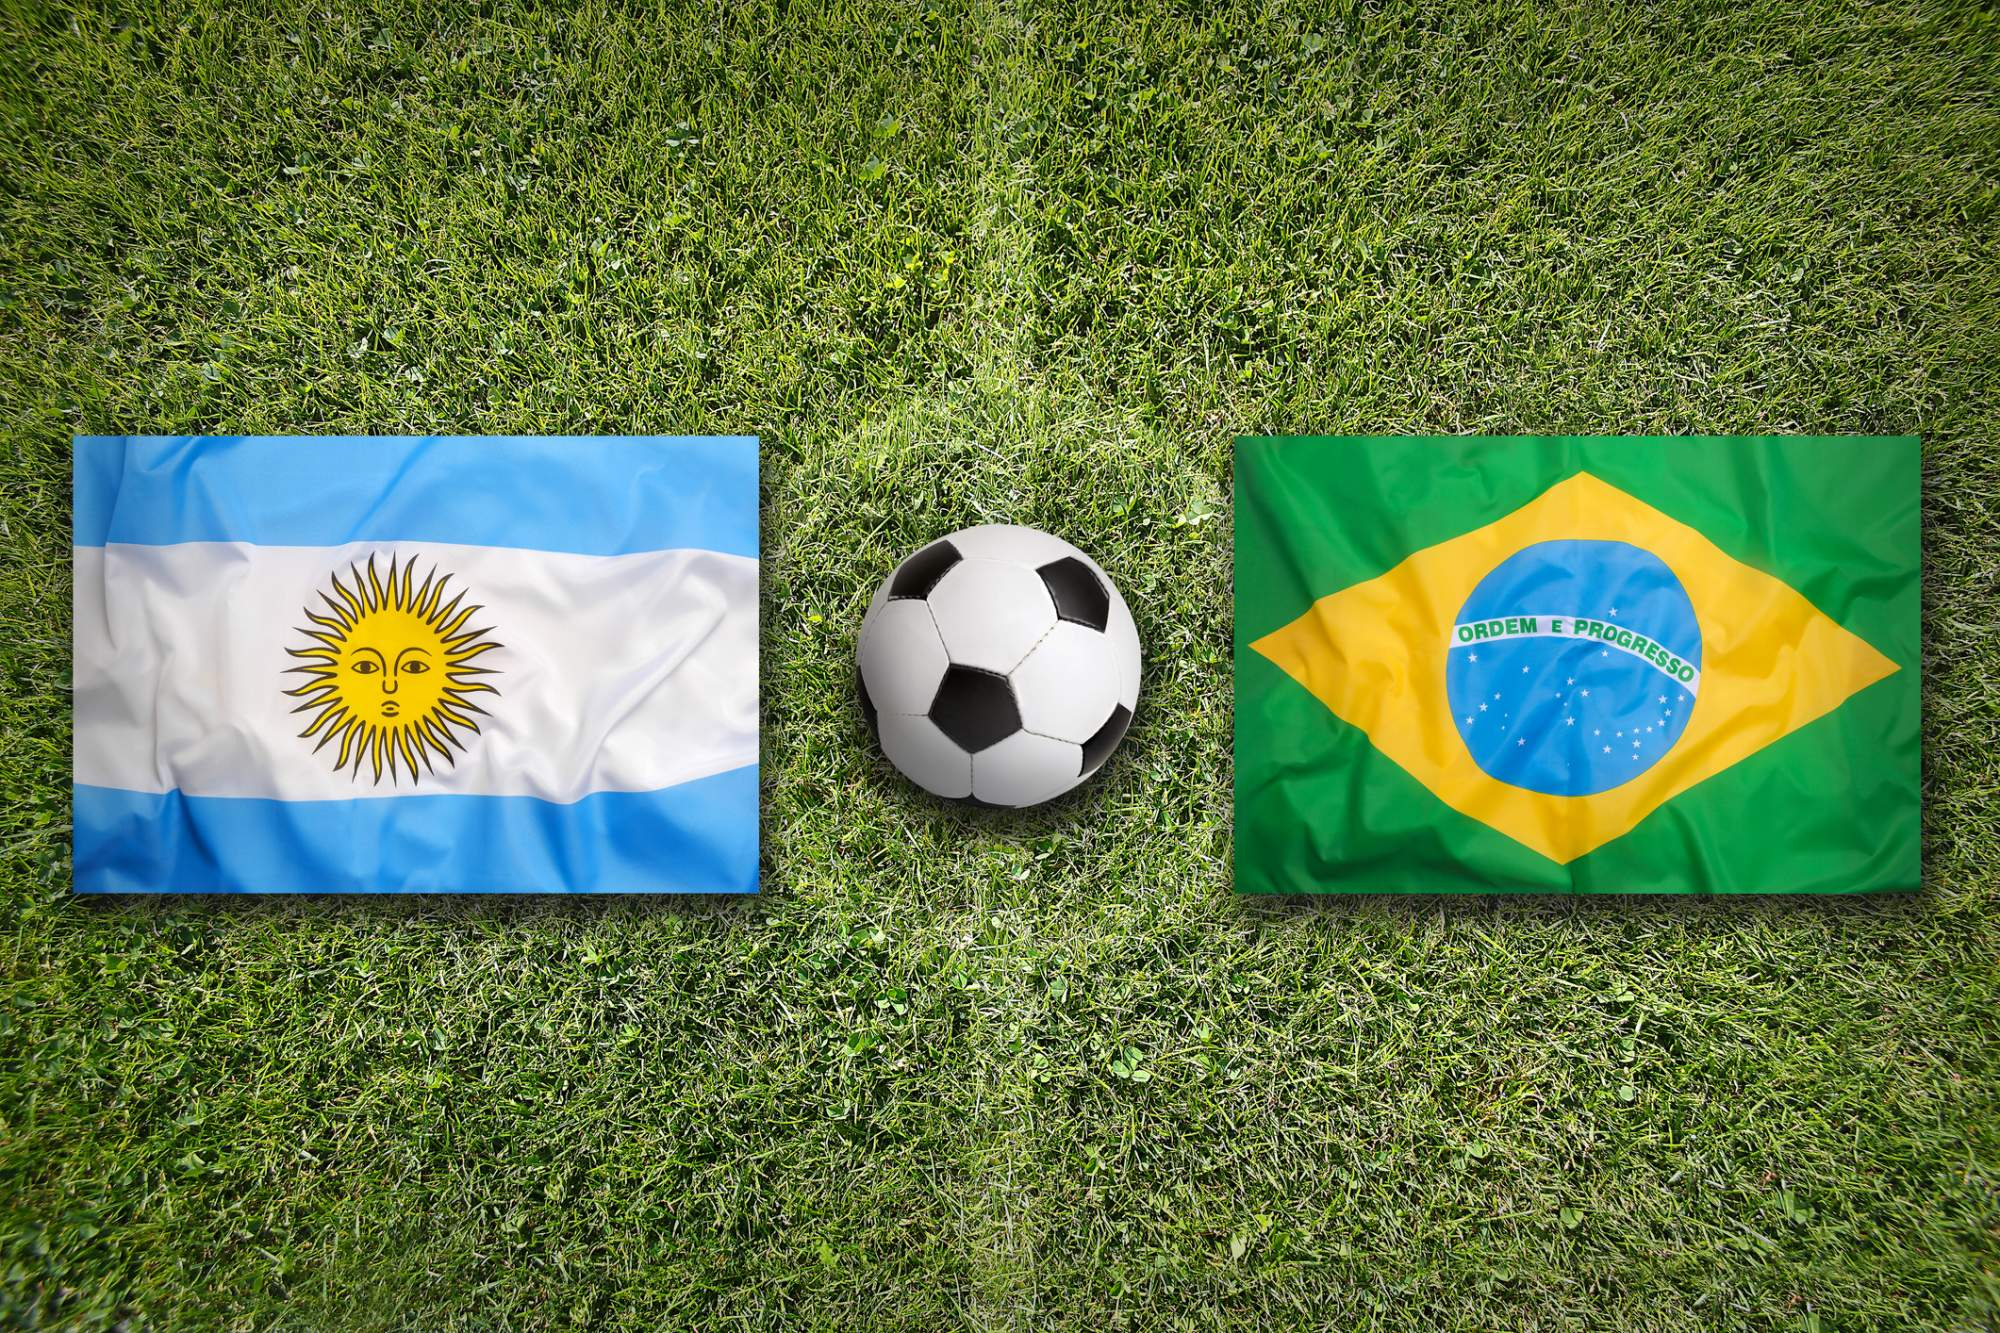 Brezilya Arjantin maçı canli izle, TRT 1